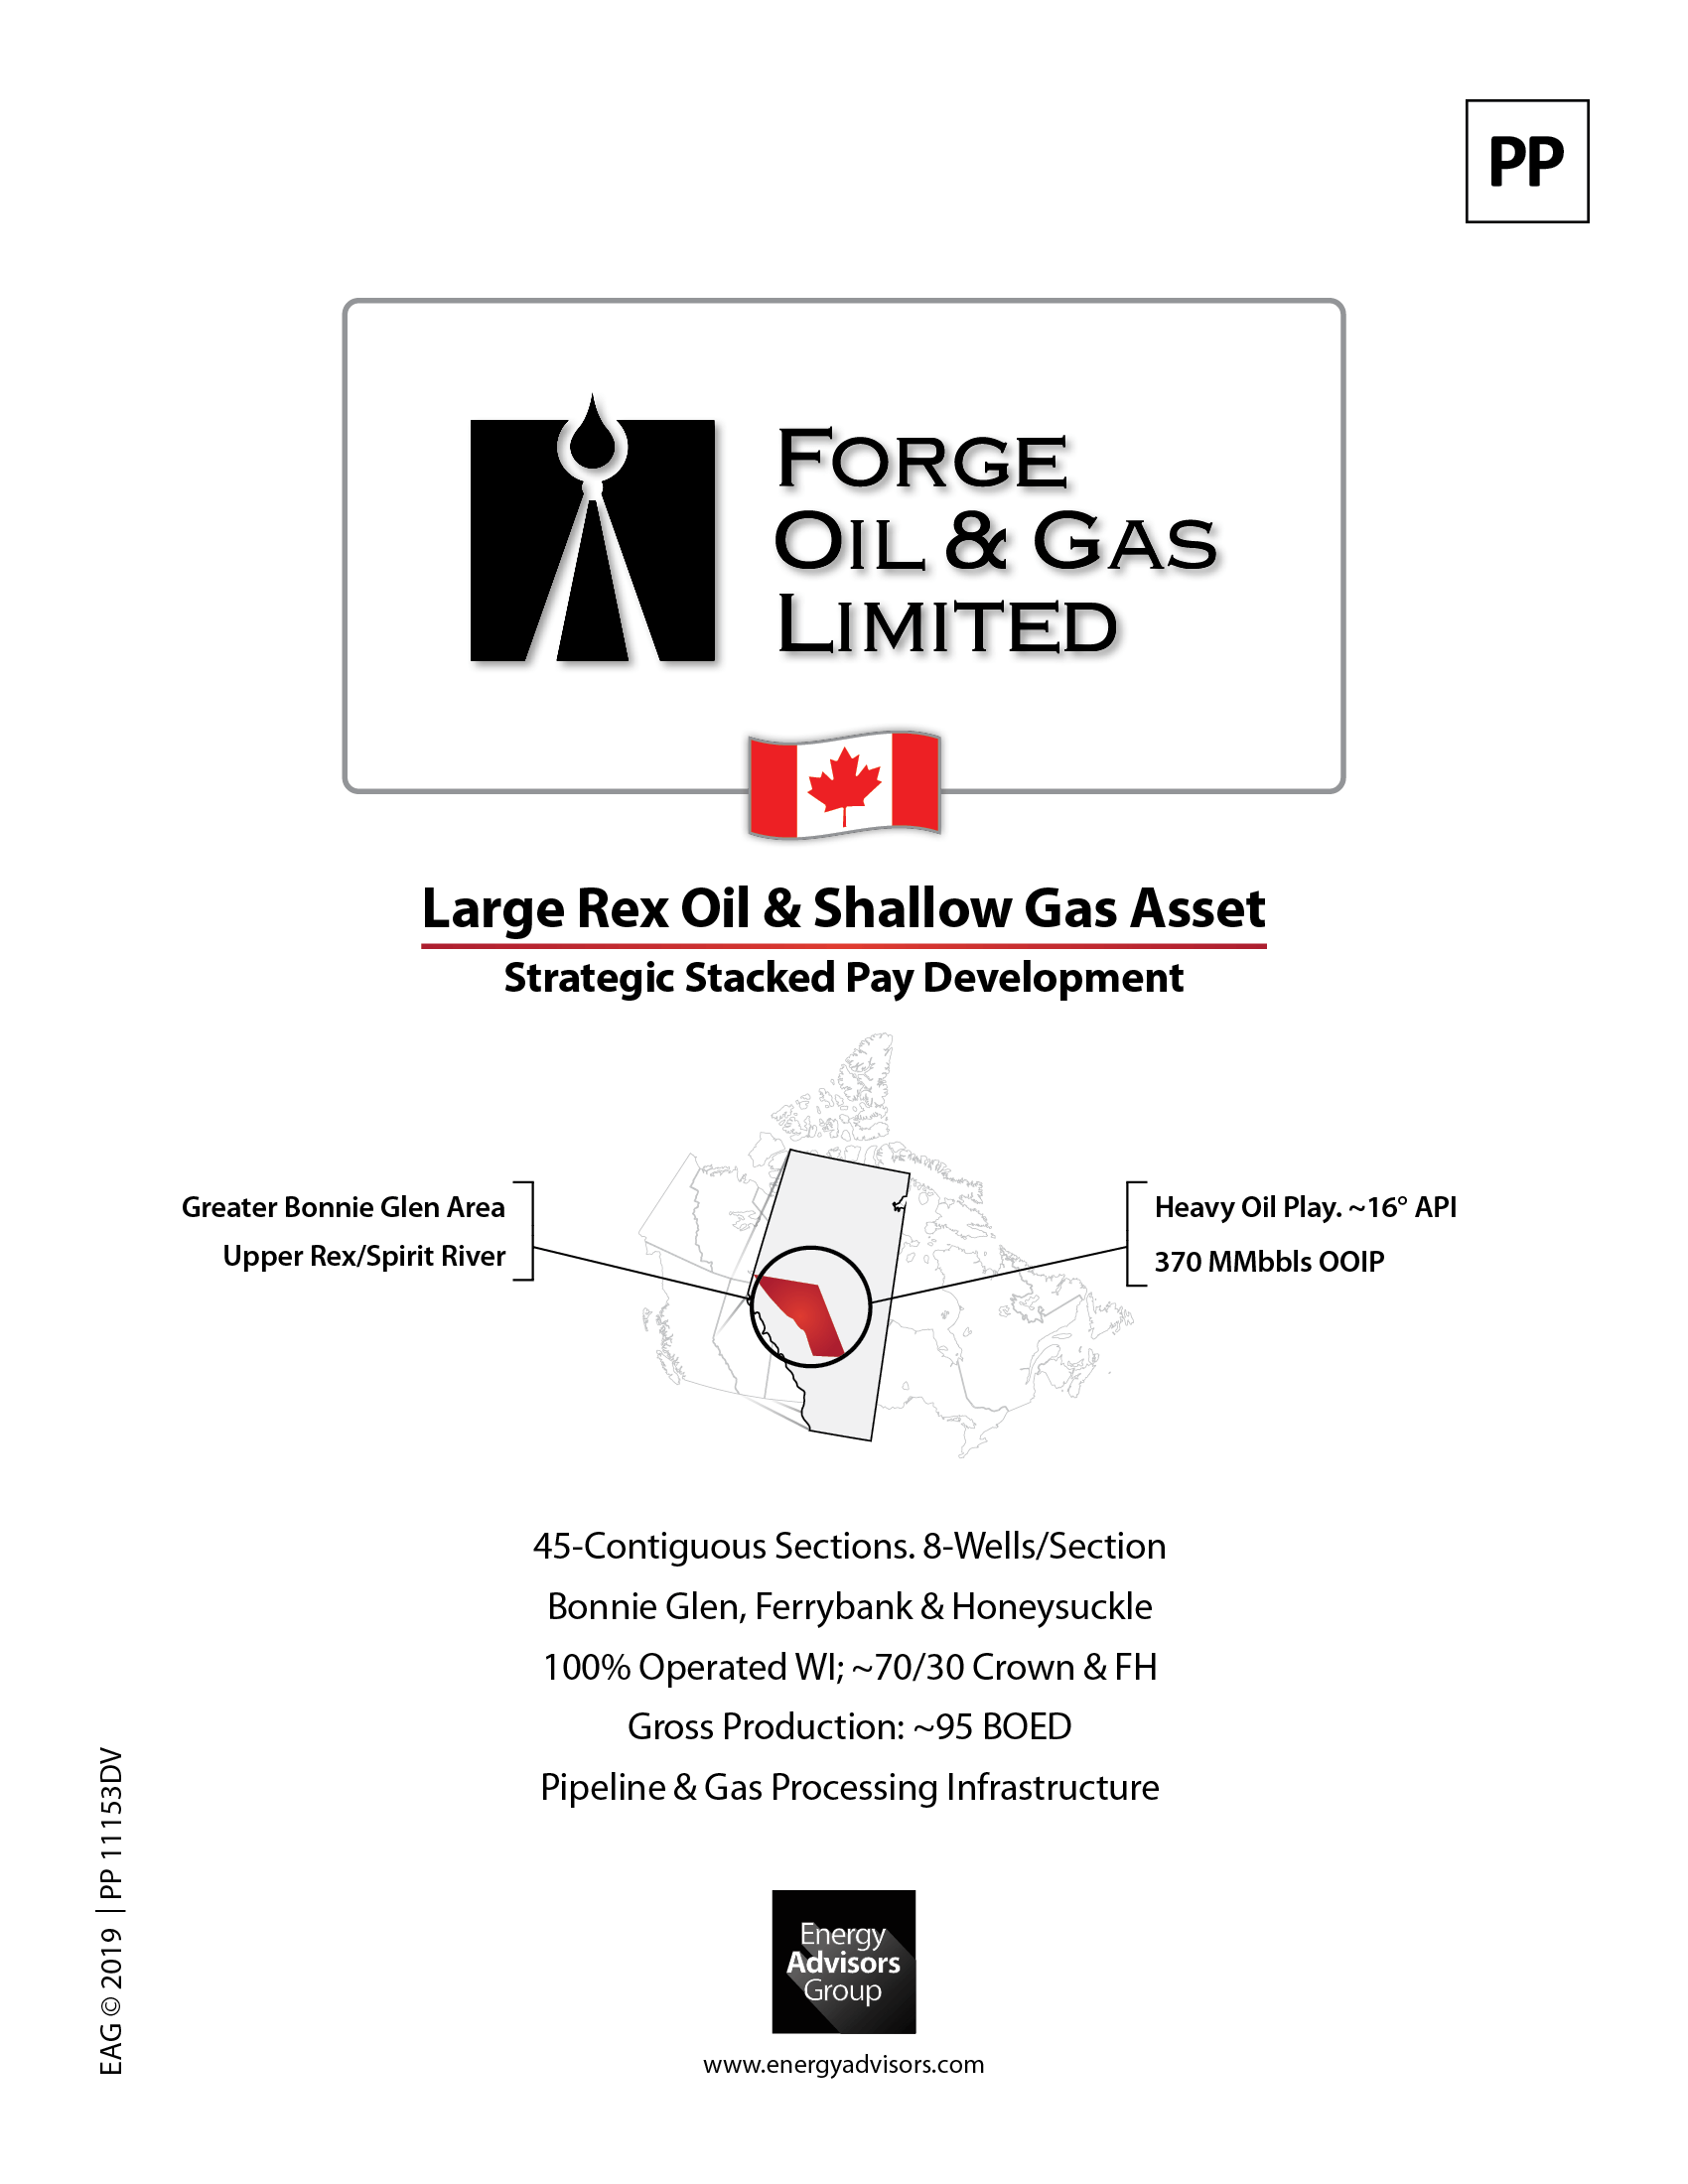 Forge Oil & Gas Mannville Development Asset Map (Source: Energy Advisors Group Inc.)